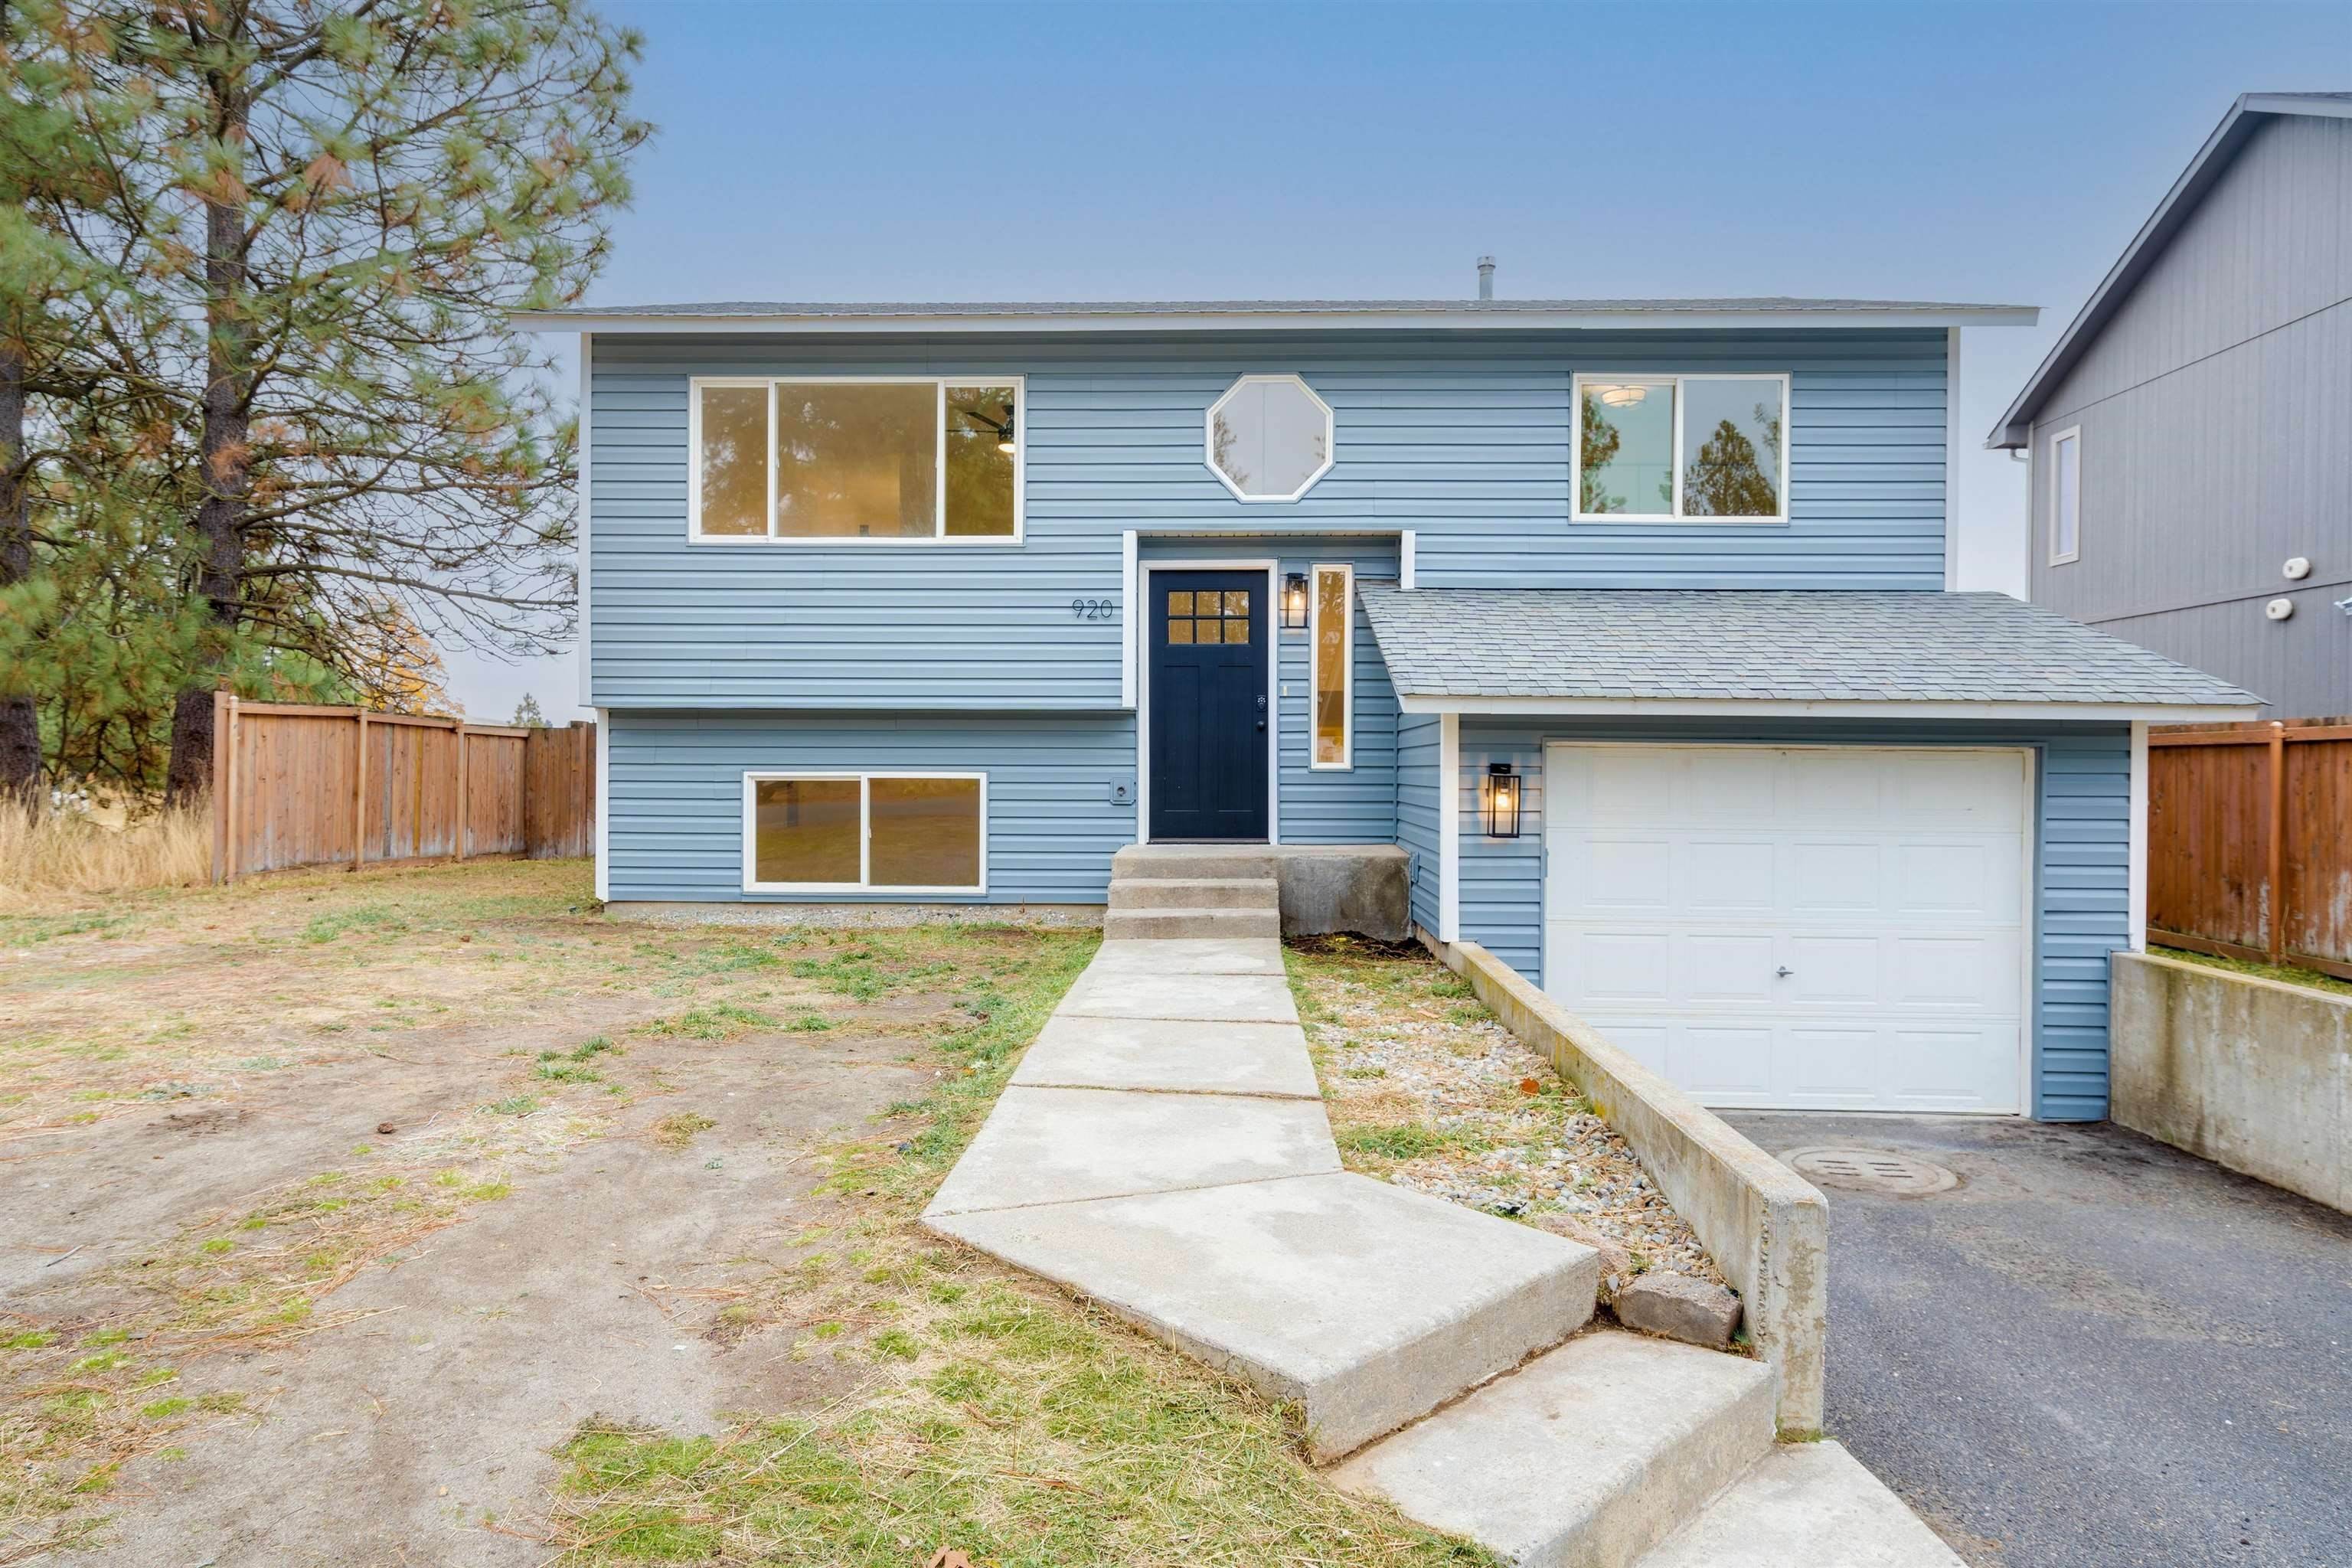 Single Family Homes for Sale at 920 N Howard Medical Lake, Washington 99022 United States